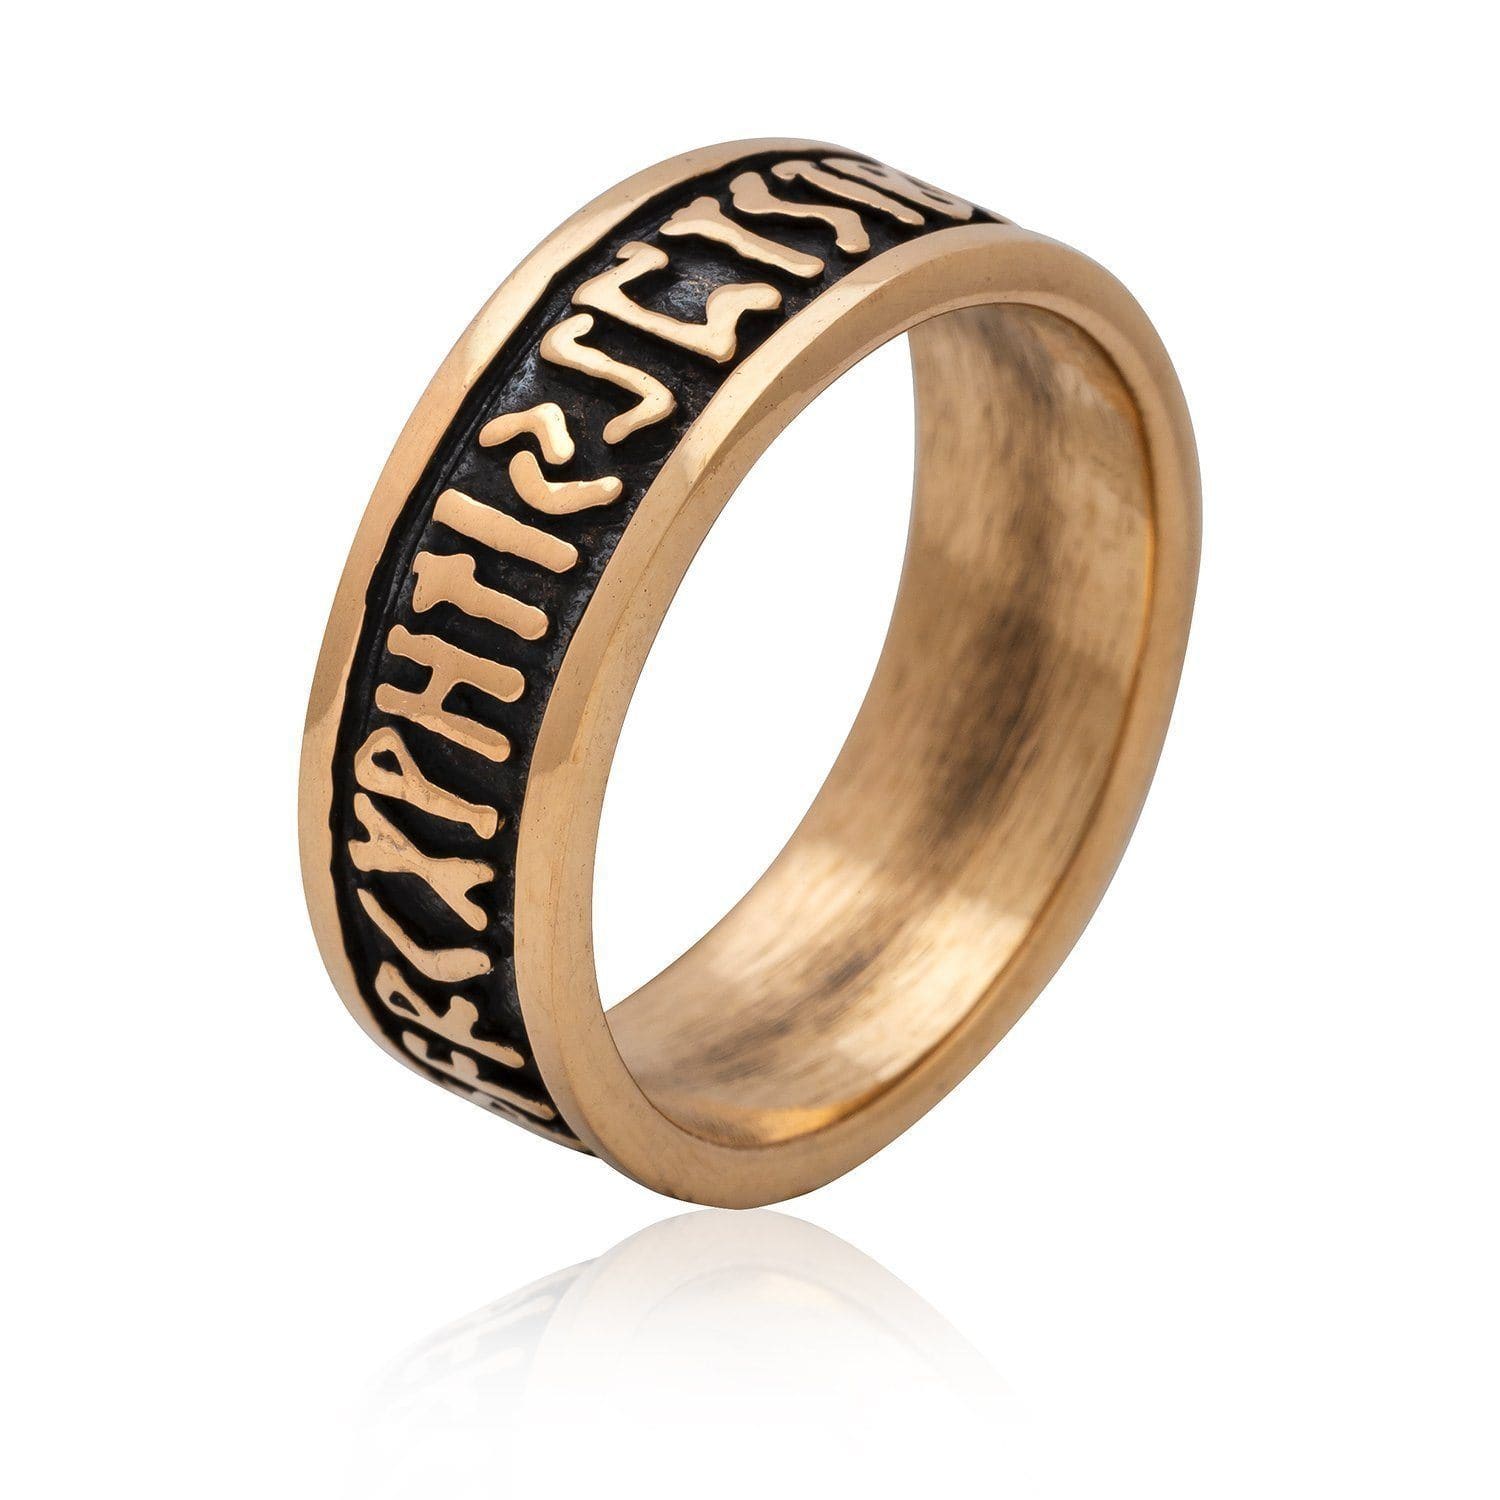 Bronze Elder Futhark Viking Ring